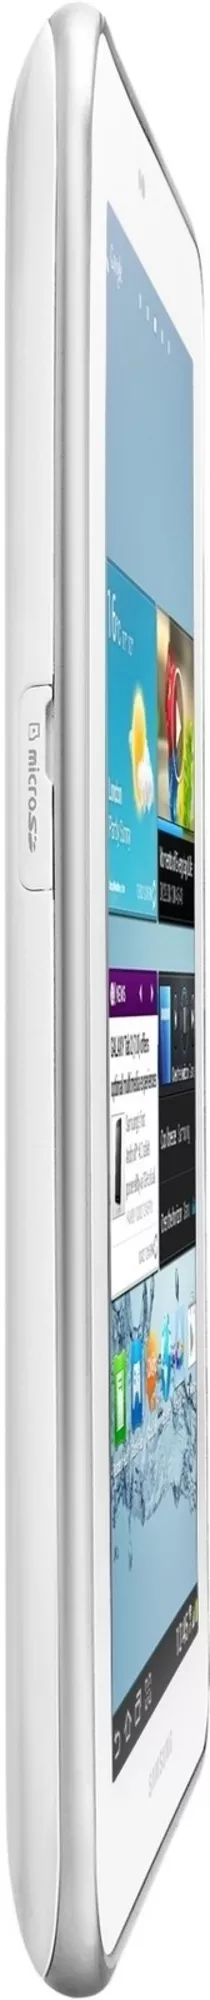 Планшет Samsung Galaxy Tab 2 GT-P3110 7.0 White 8 Gb (оригинал) 4